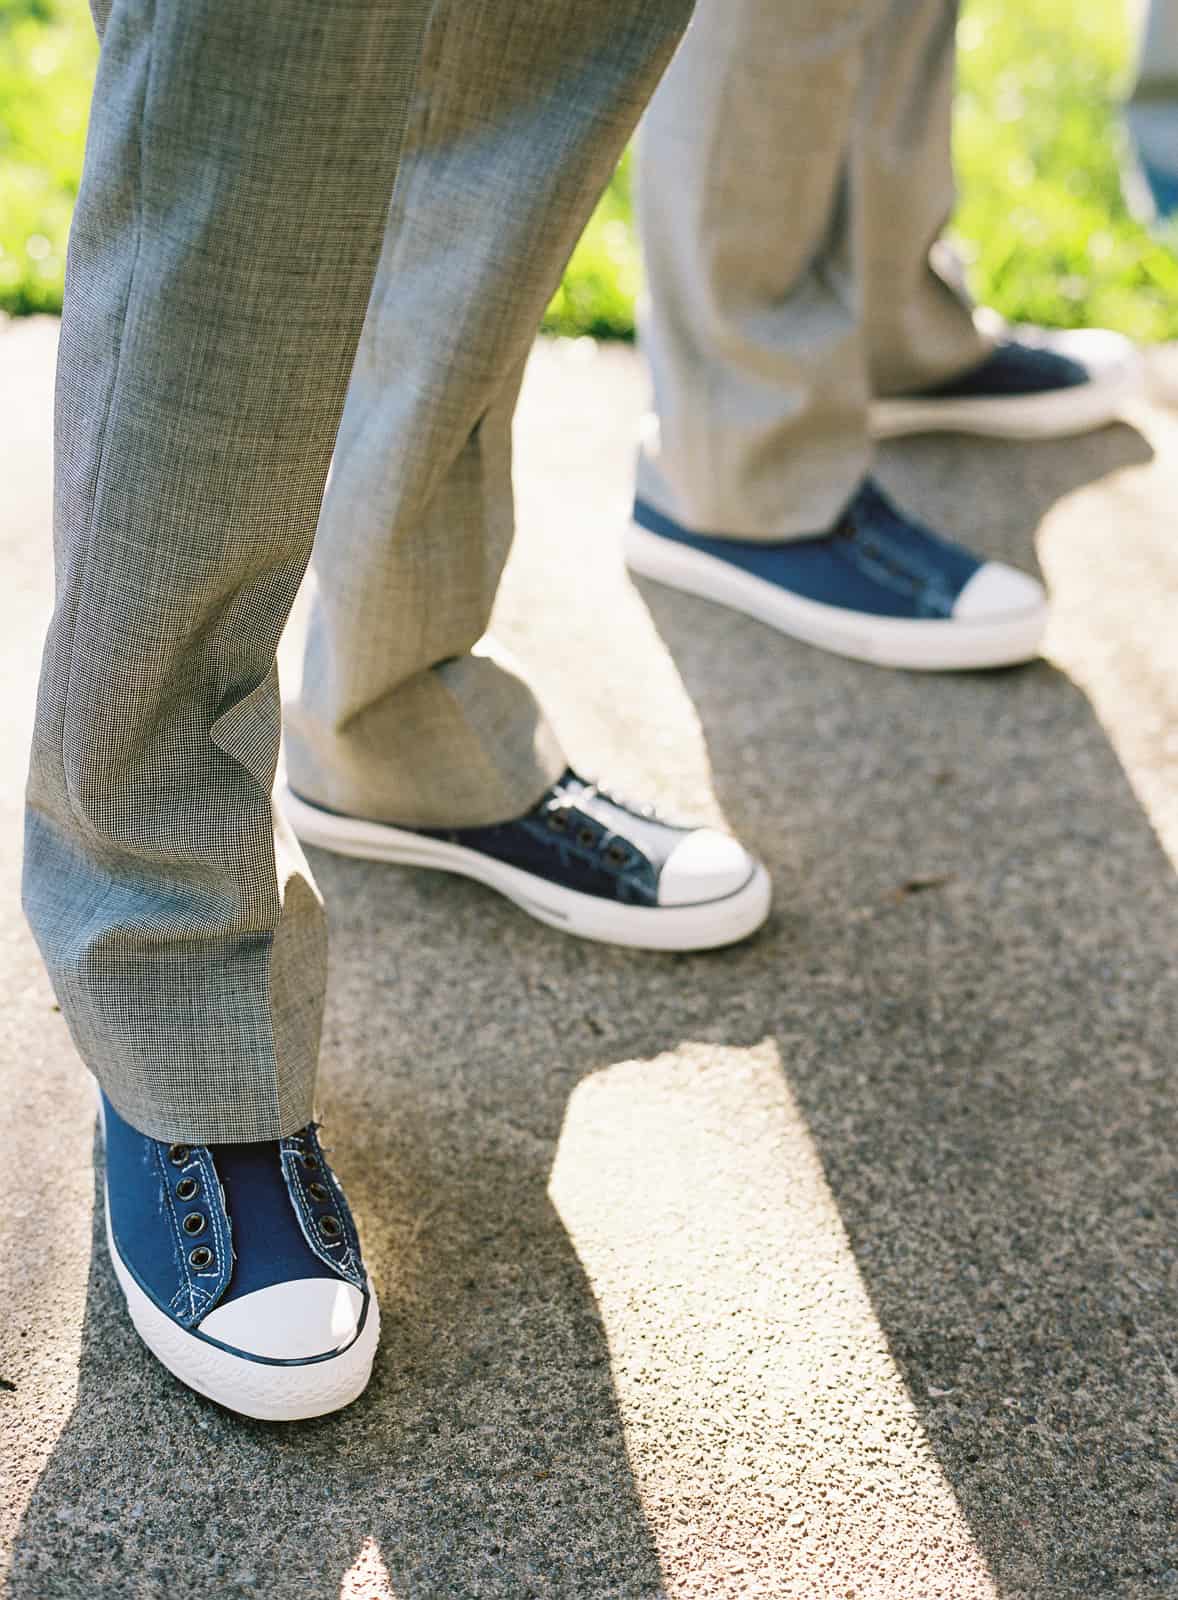 Closeup of groomsmen's blue converse shoes